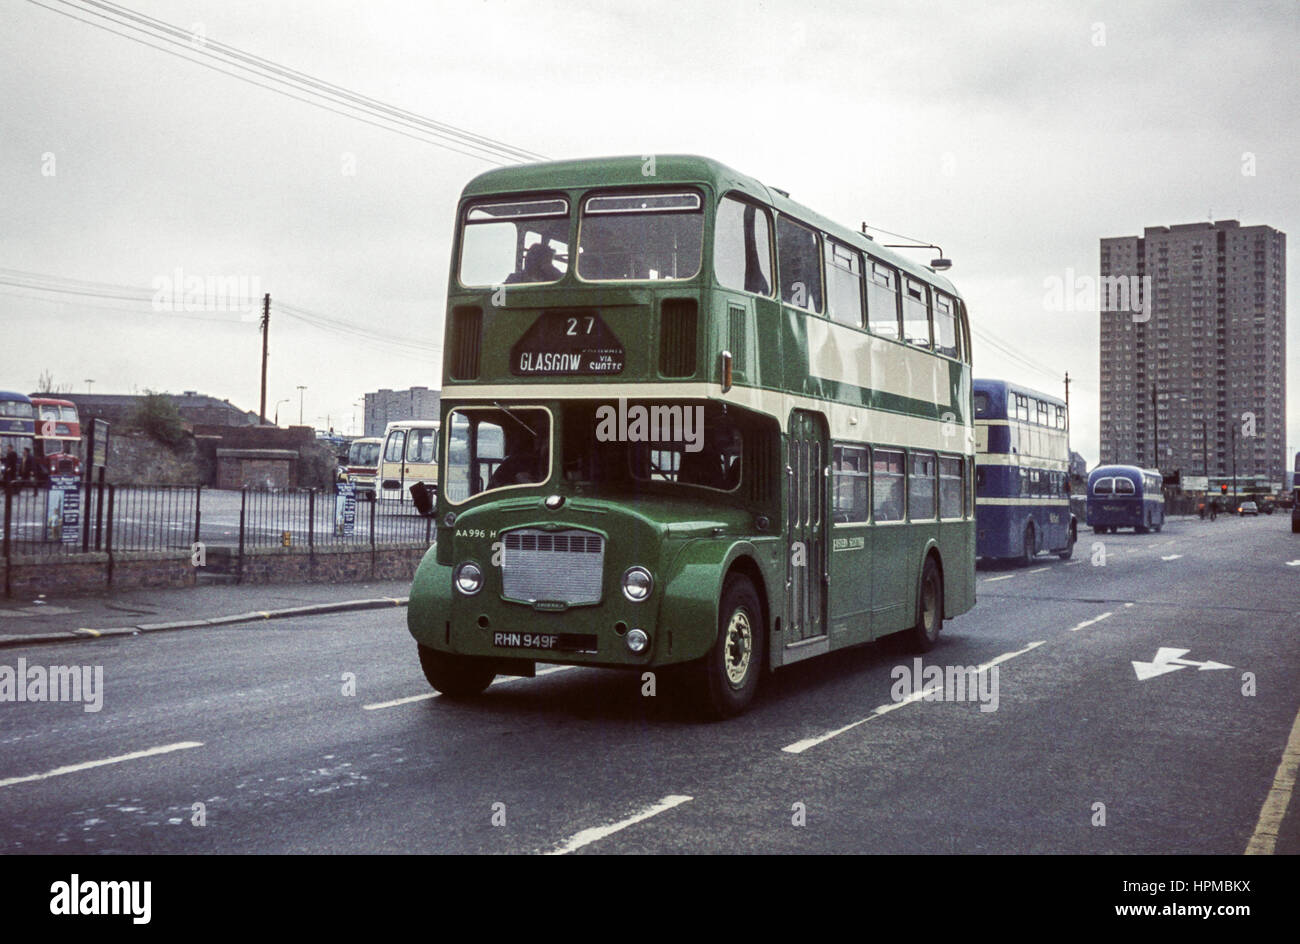 Escocia, Reino Unido - 1973: Vintage imagen de autobús en carretera. Escocia Oriental Bristol Lodekka FLF6G/ECW AA996 (número de registro RHN 949F). Foto de stock